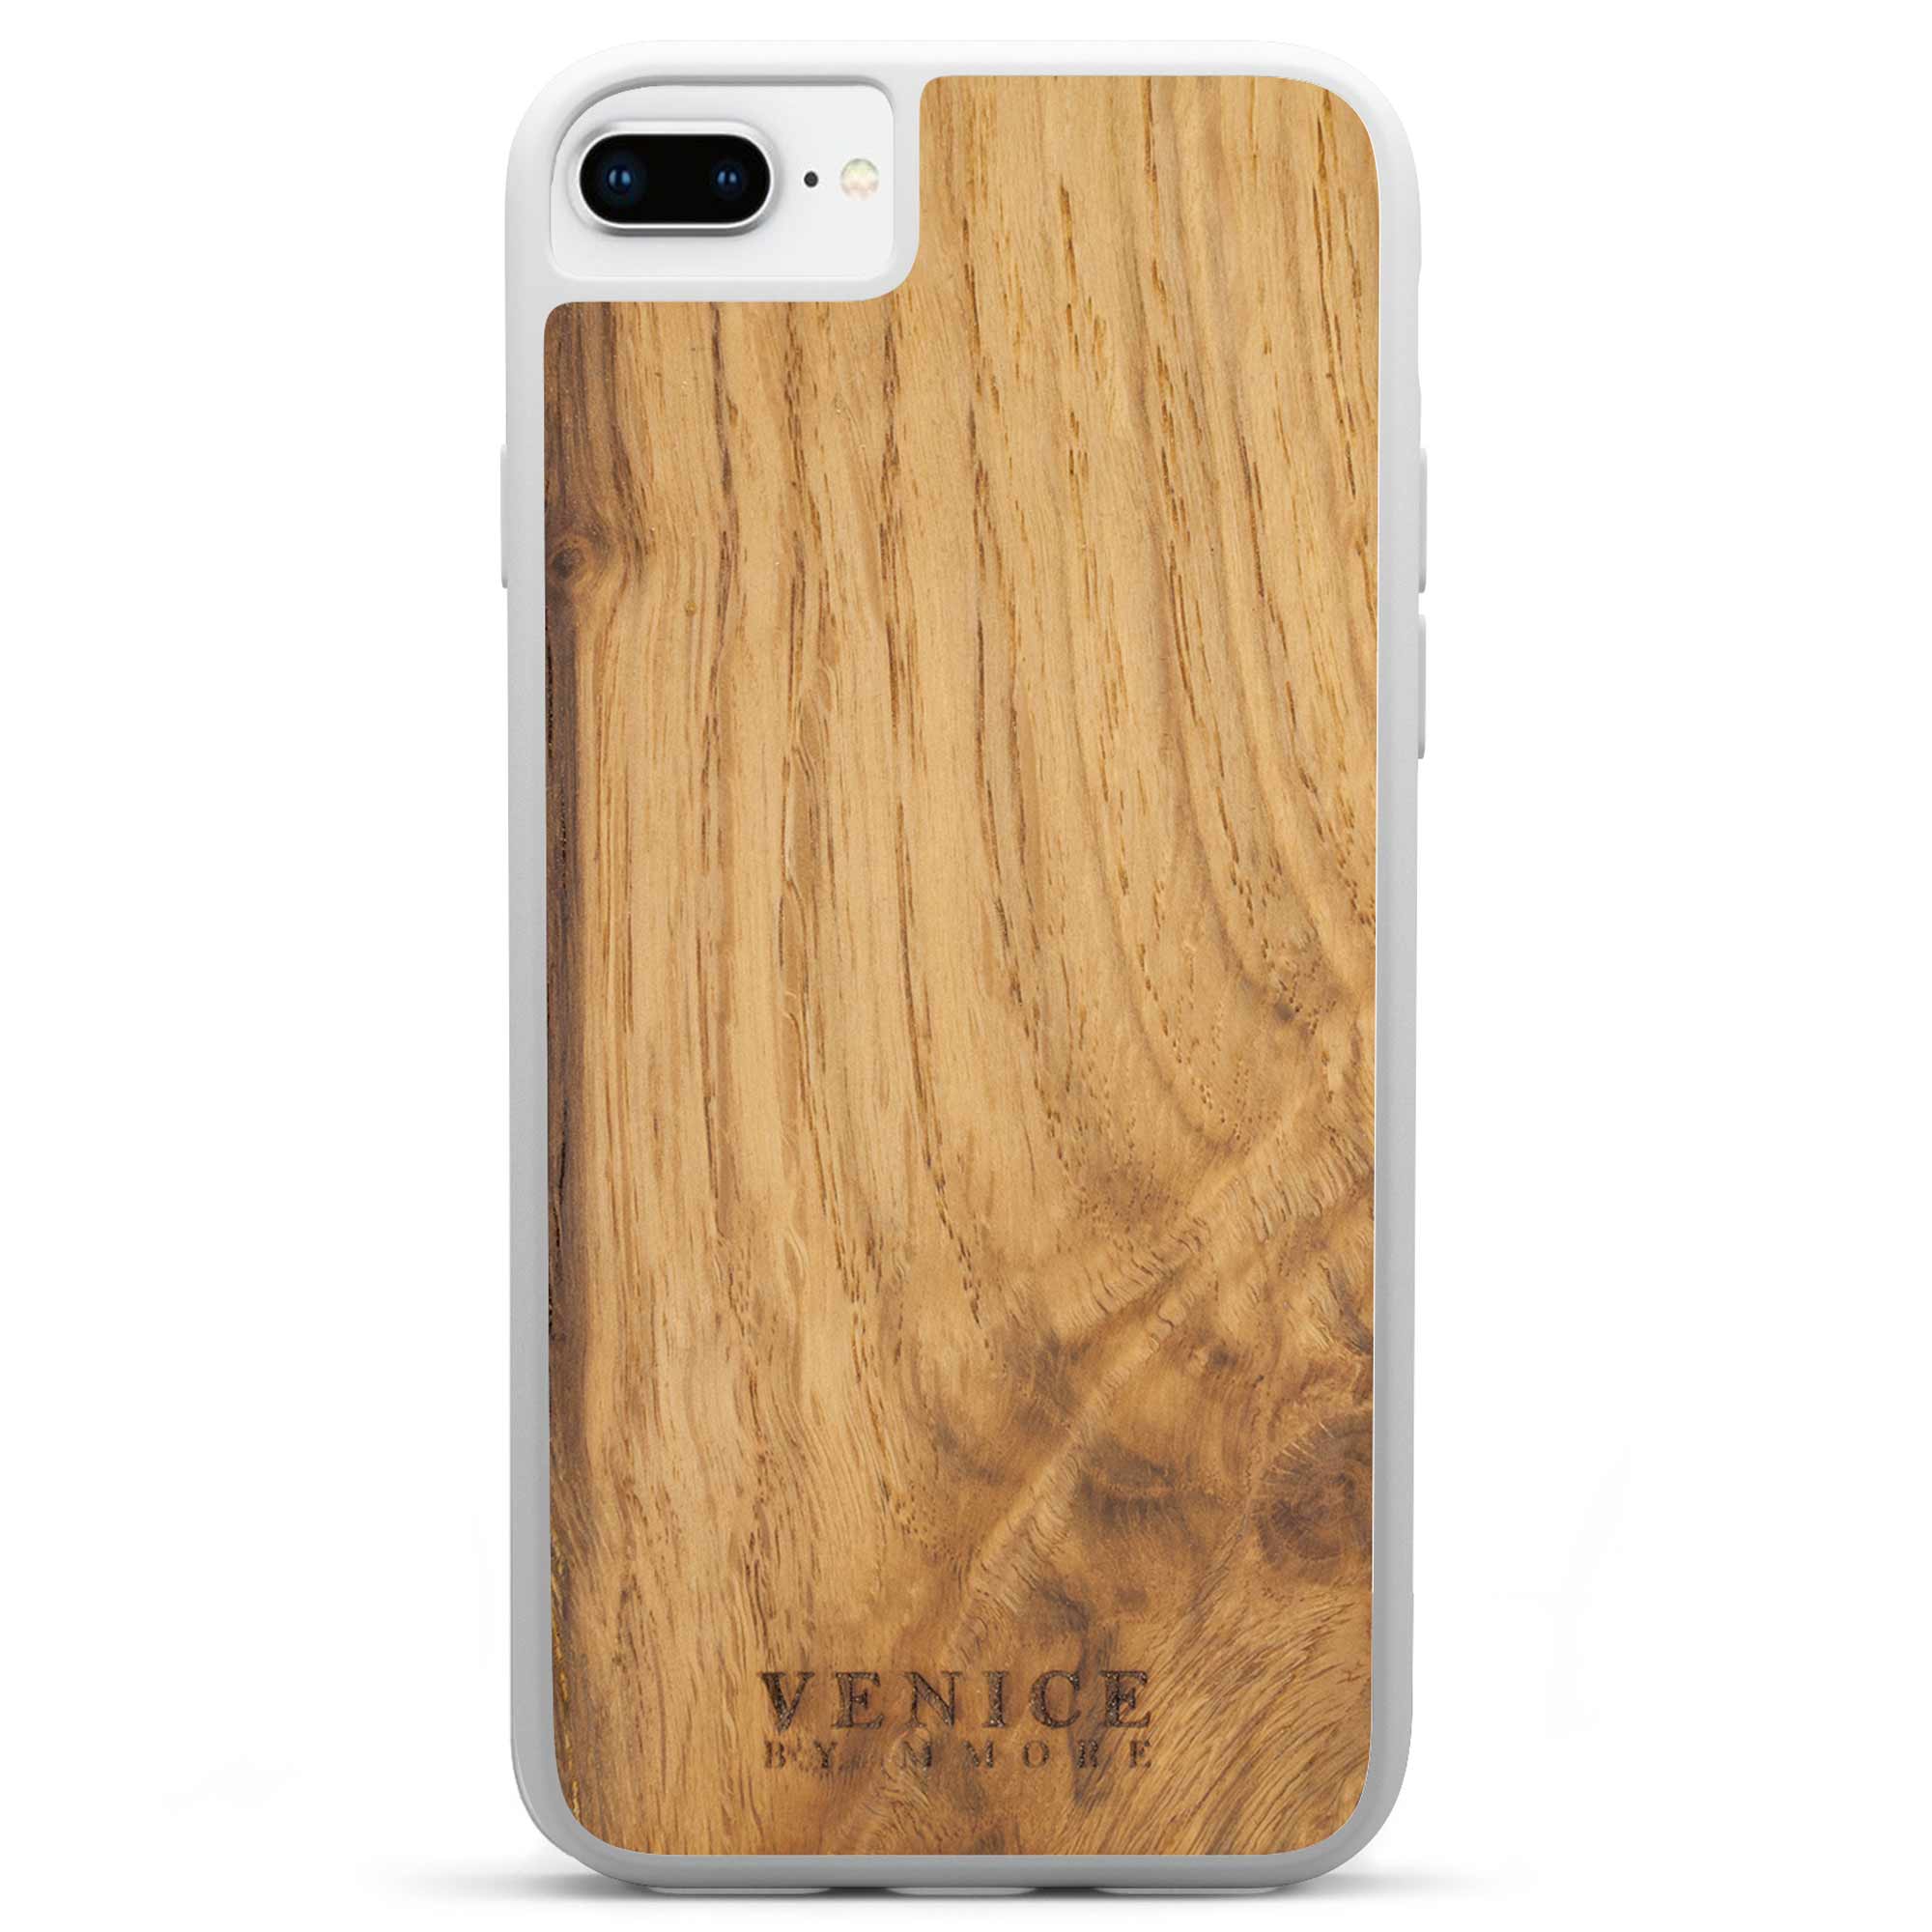 Funda para iPhone 8 Plus Venice Lettering Wood blanca para teléfono